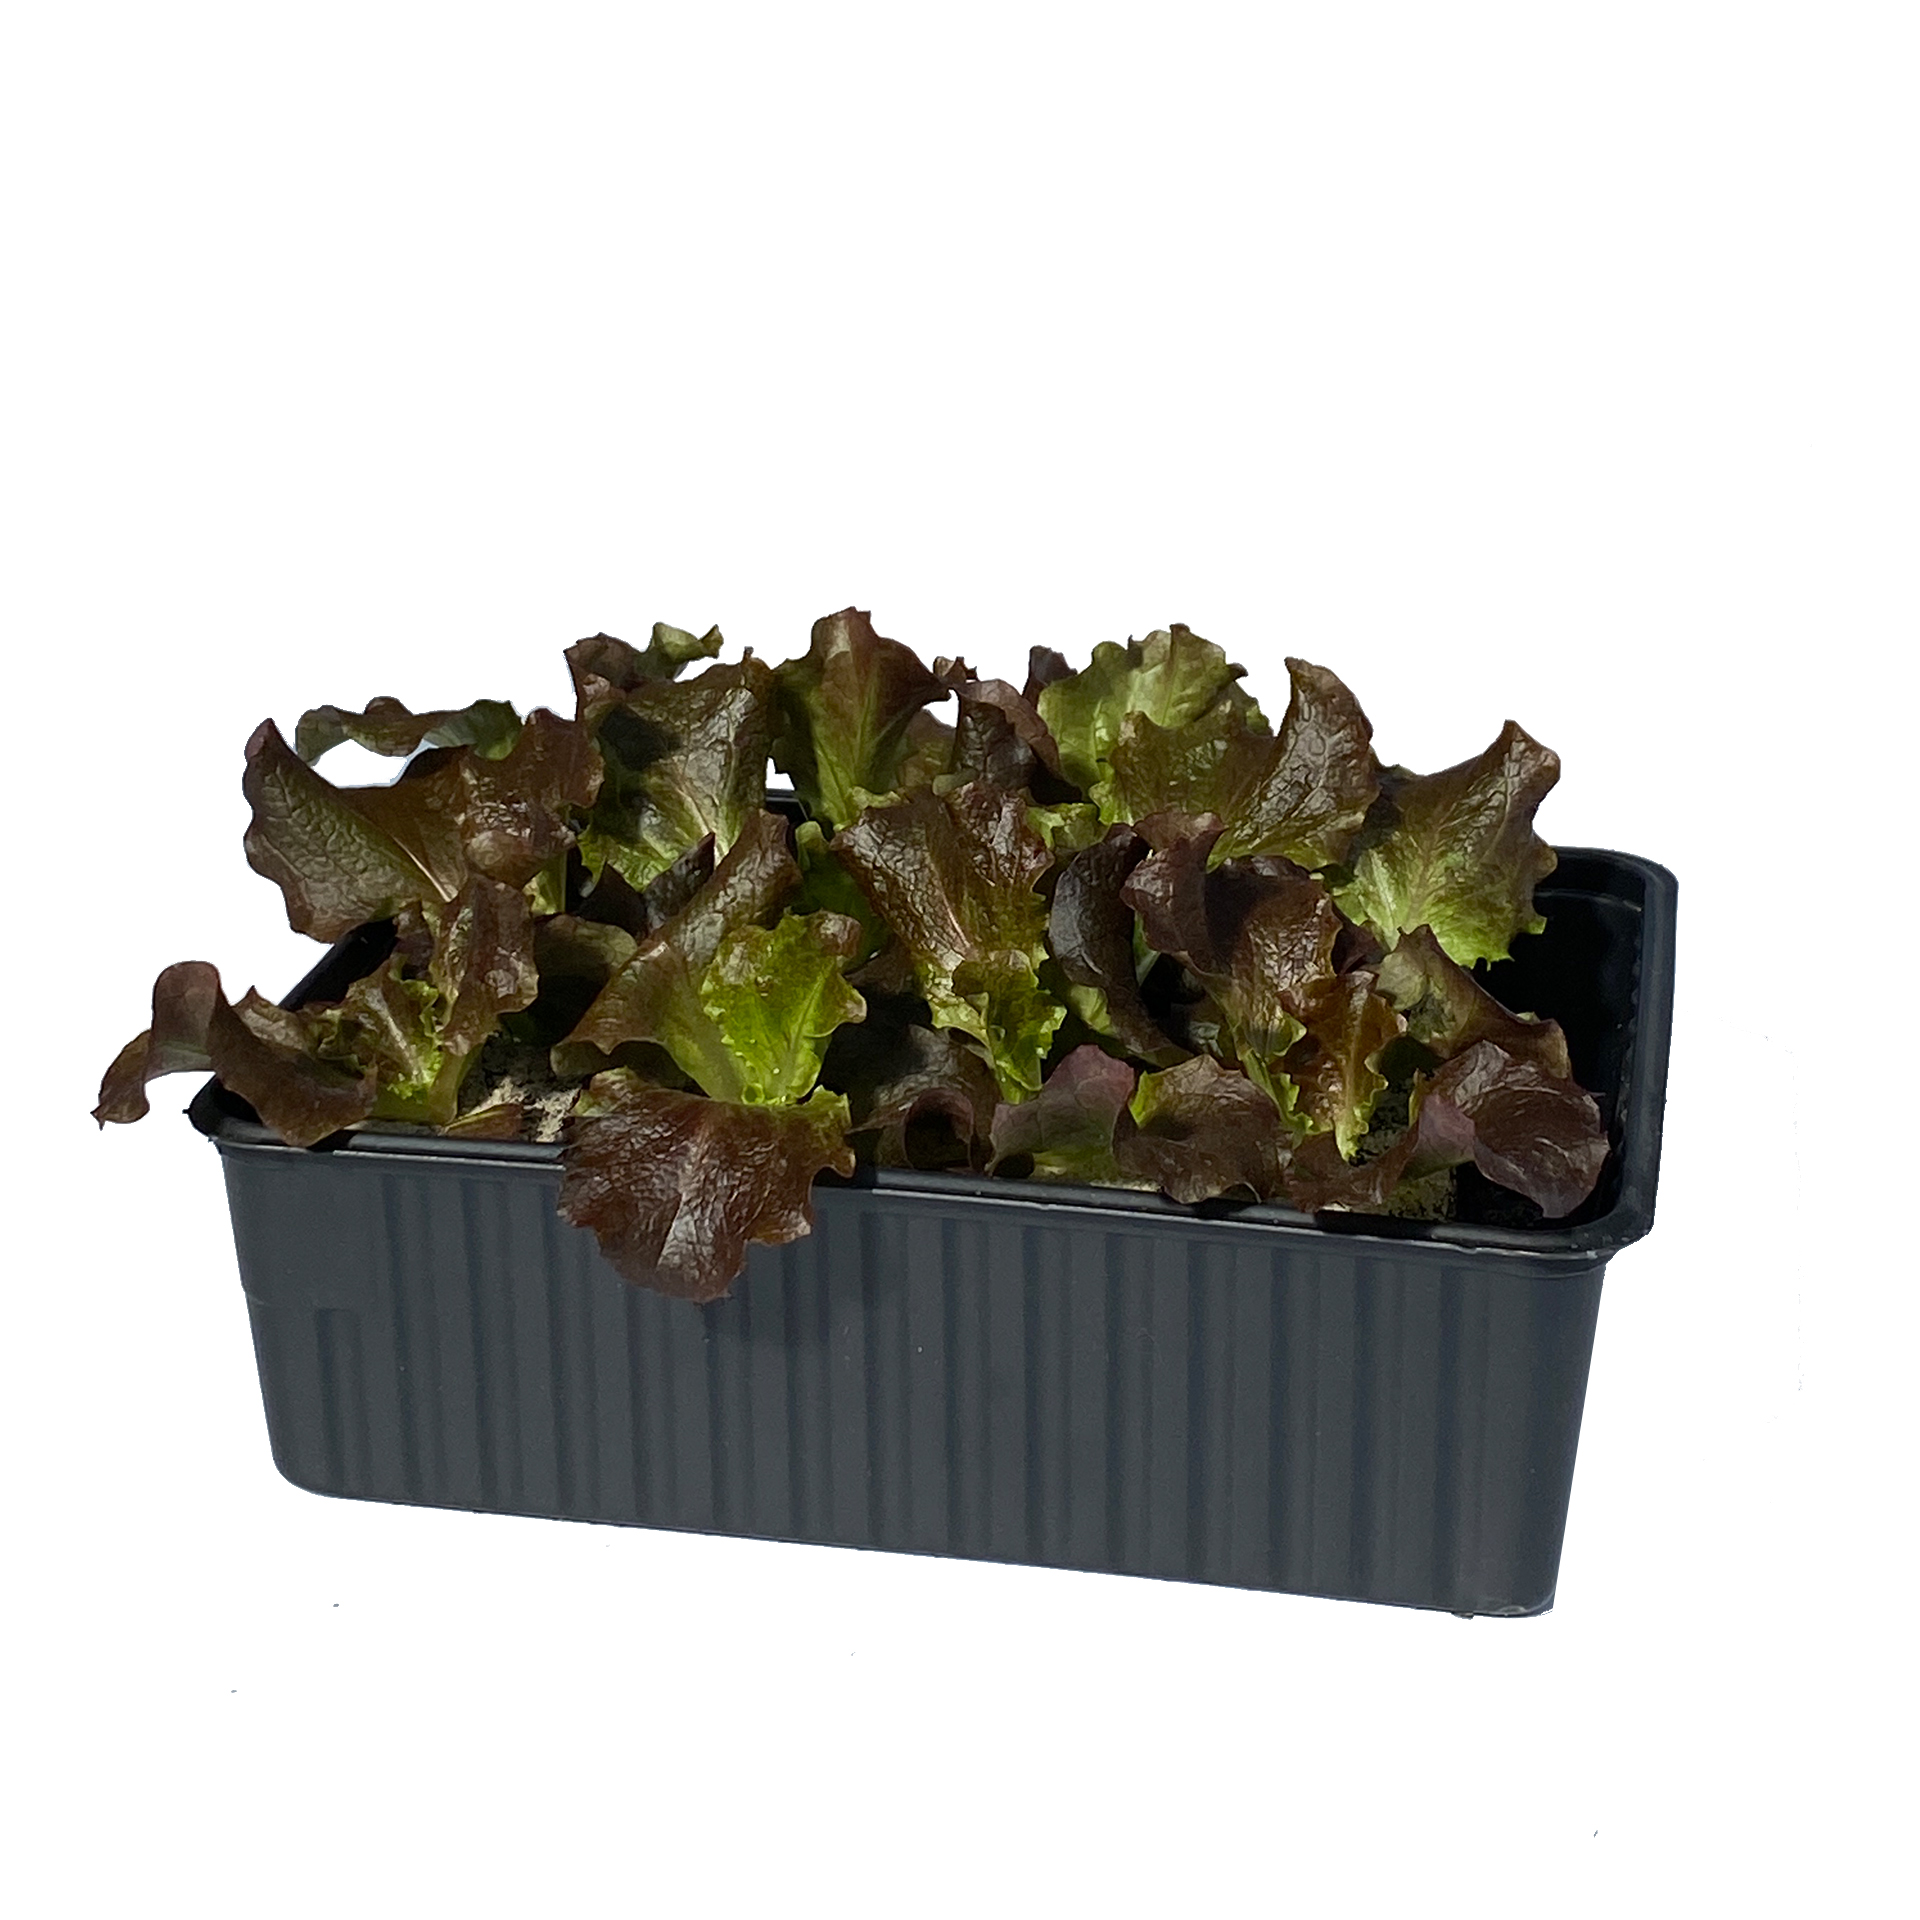 Schale mit Salatpflanzen Bataviasalat